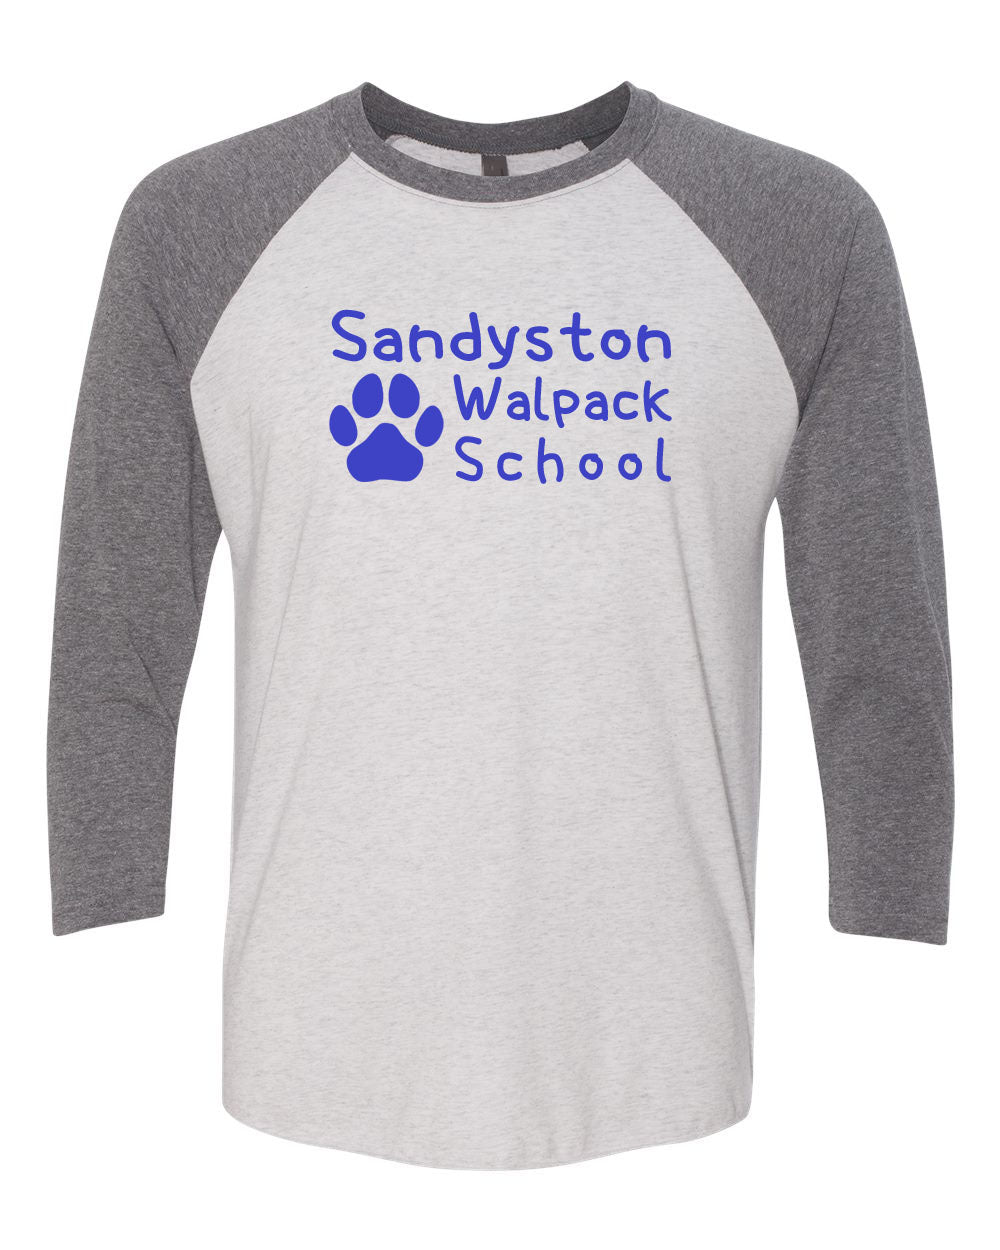 Sandyston Walpack Design 3 raglan shirt